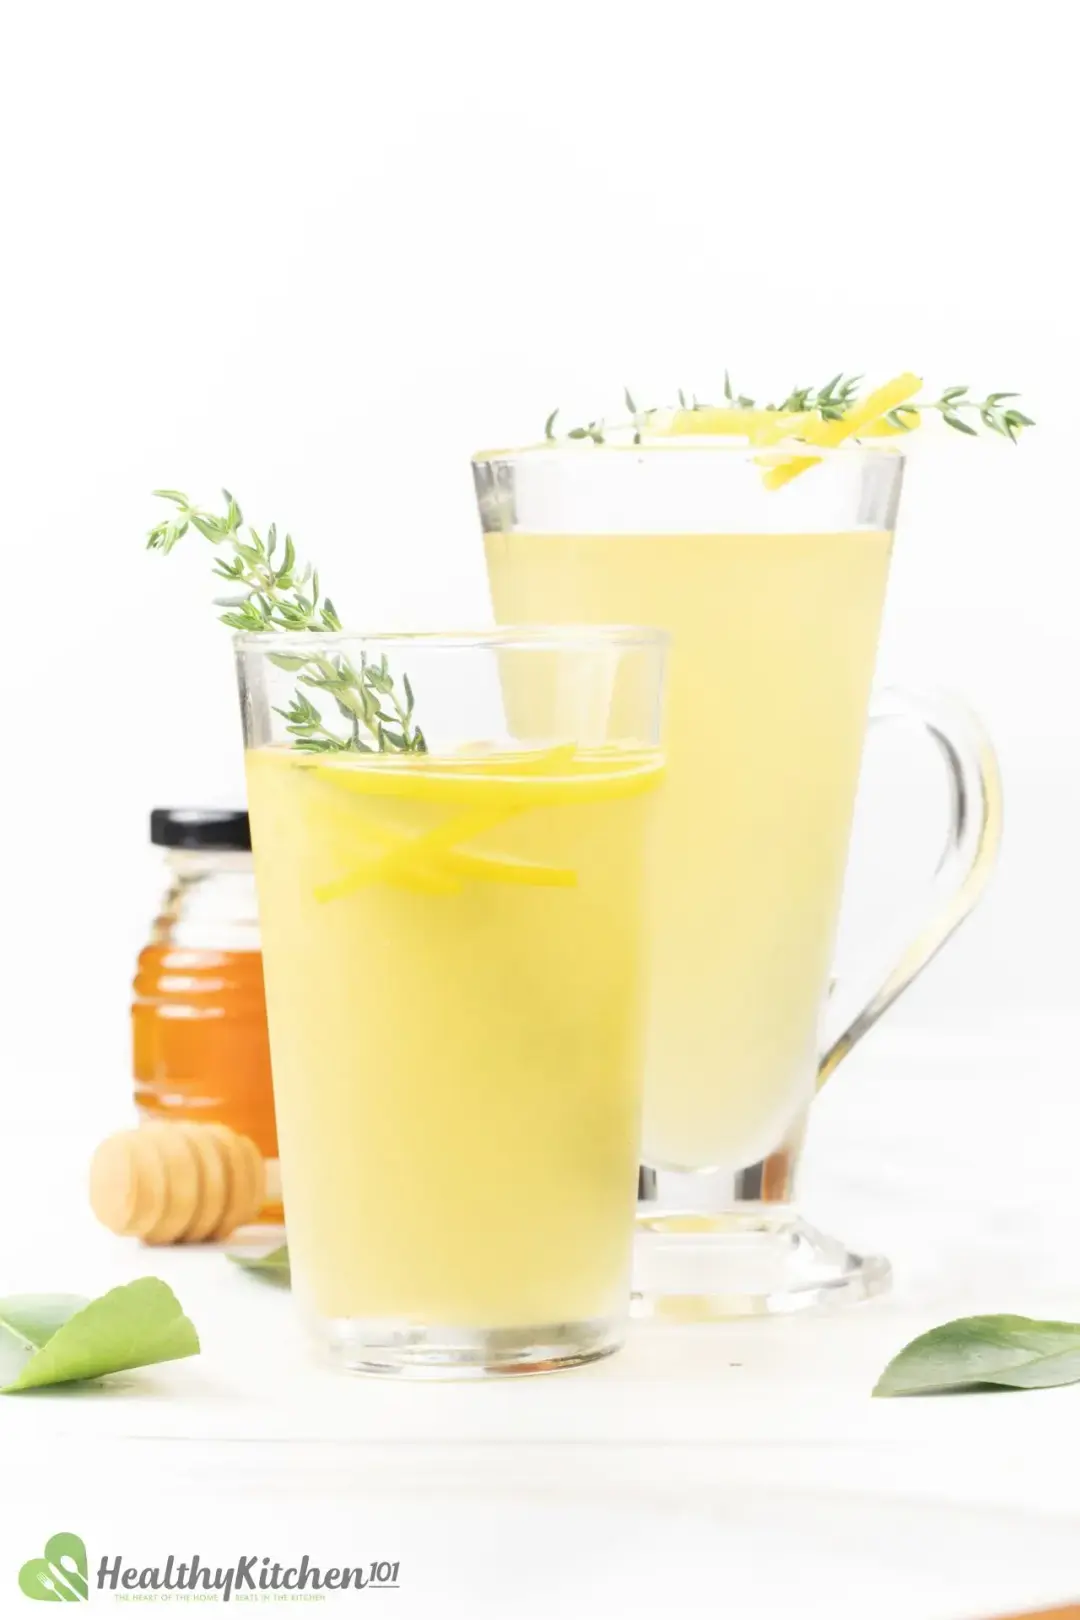 Two lemonade glasses with thyme sprigs and lemon peels inside